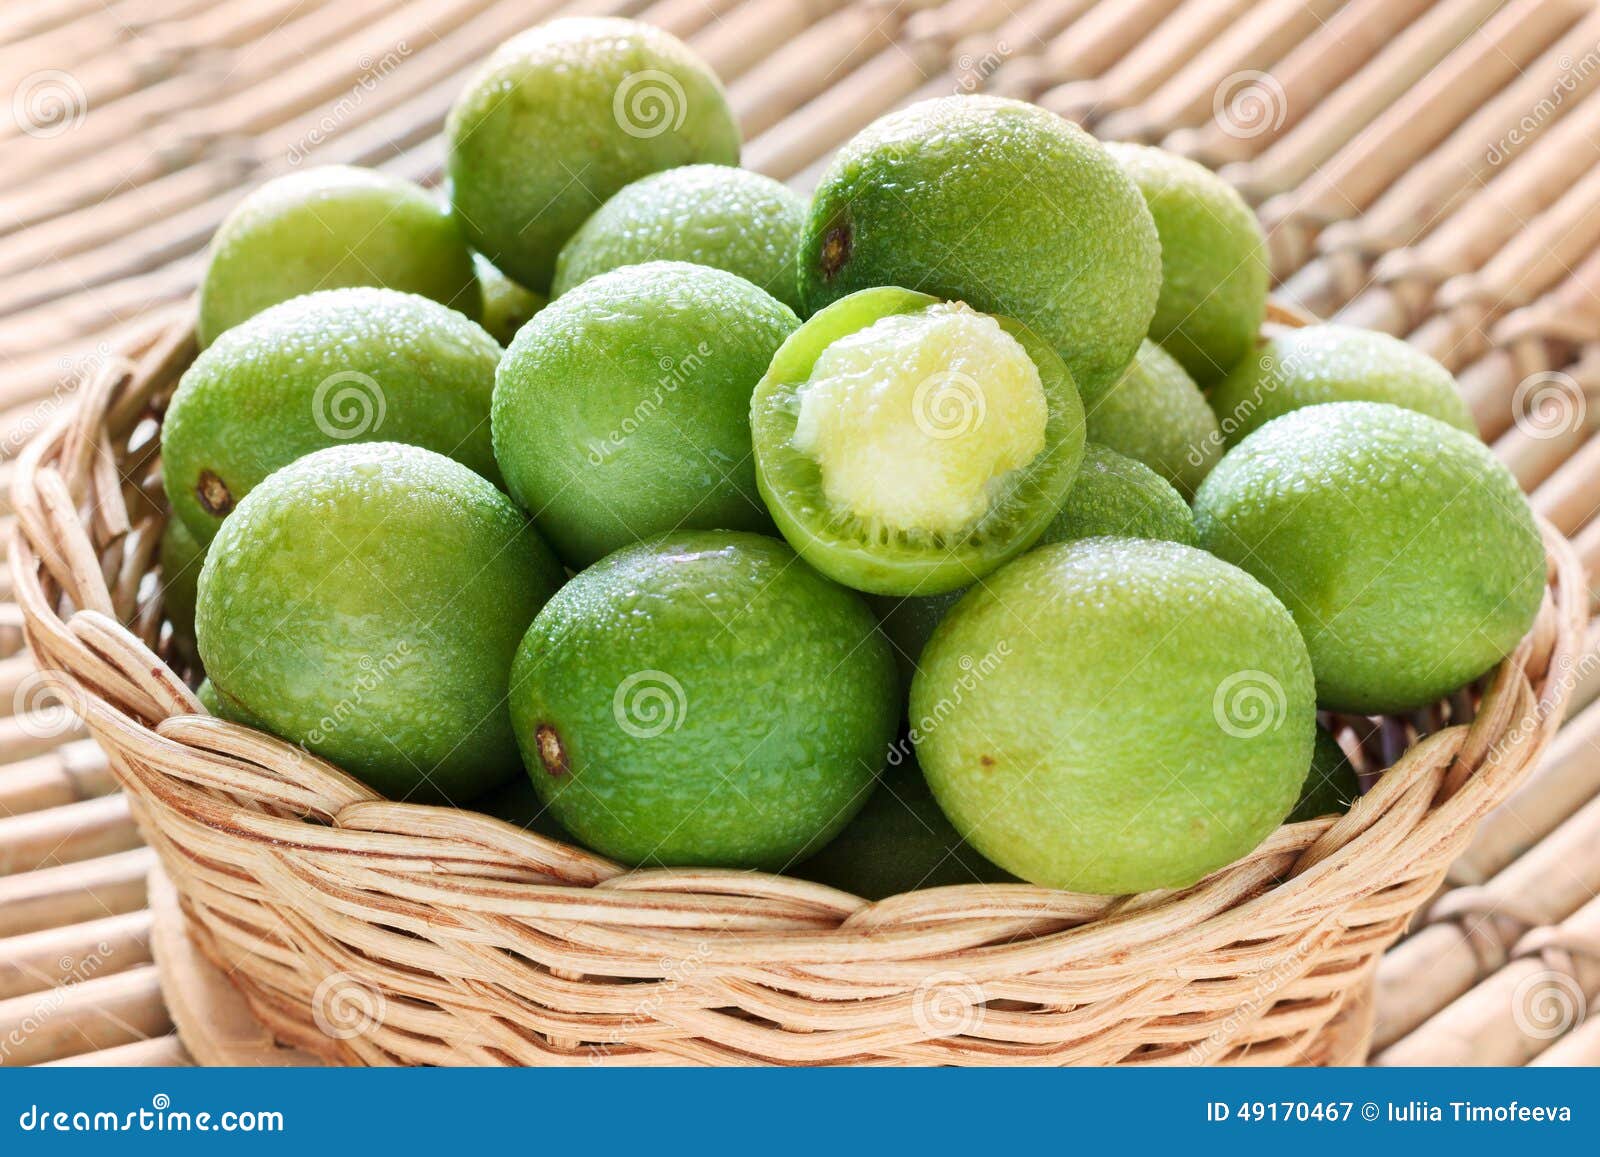 Fruits Basket Brazil